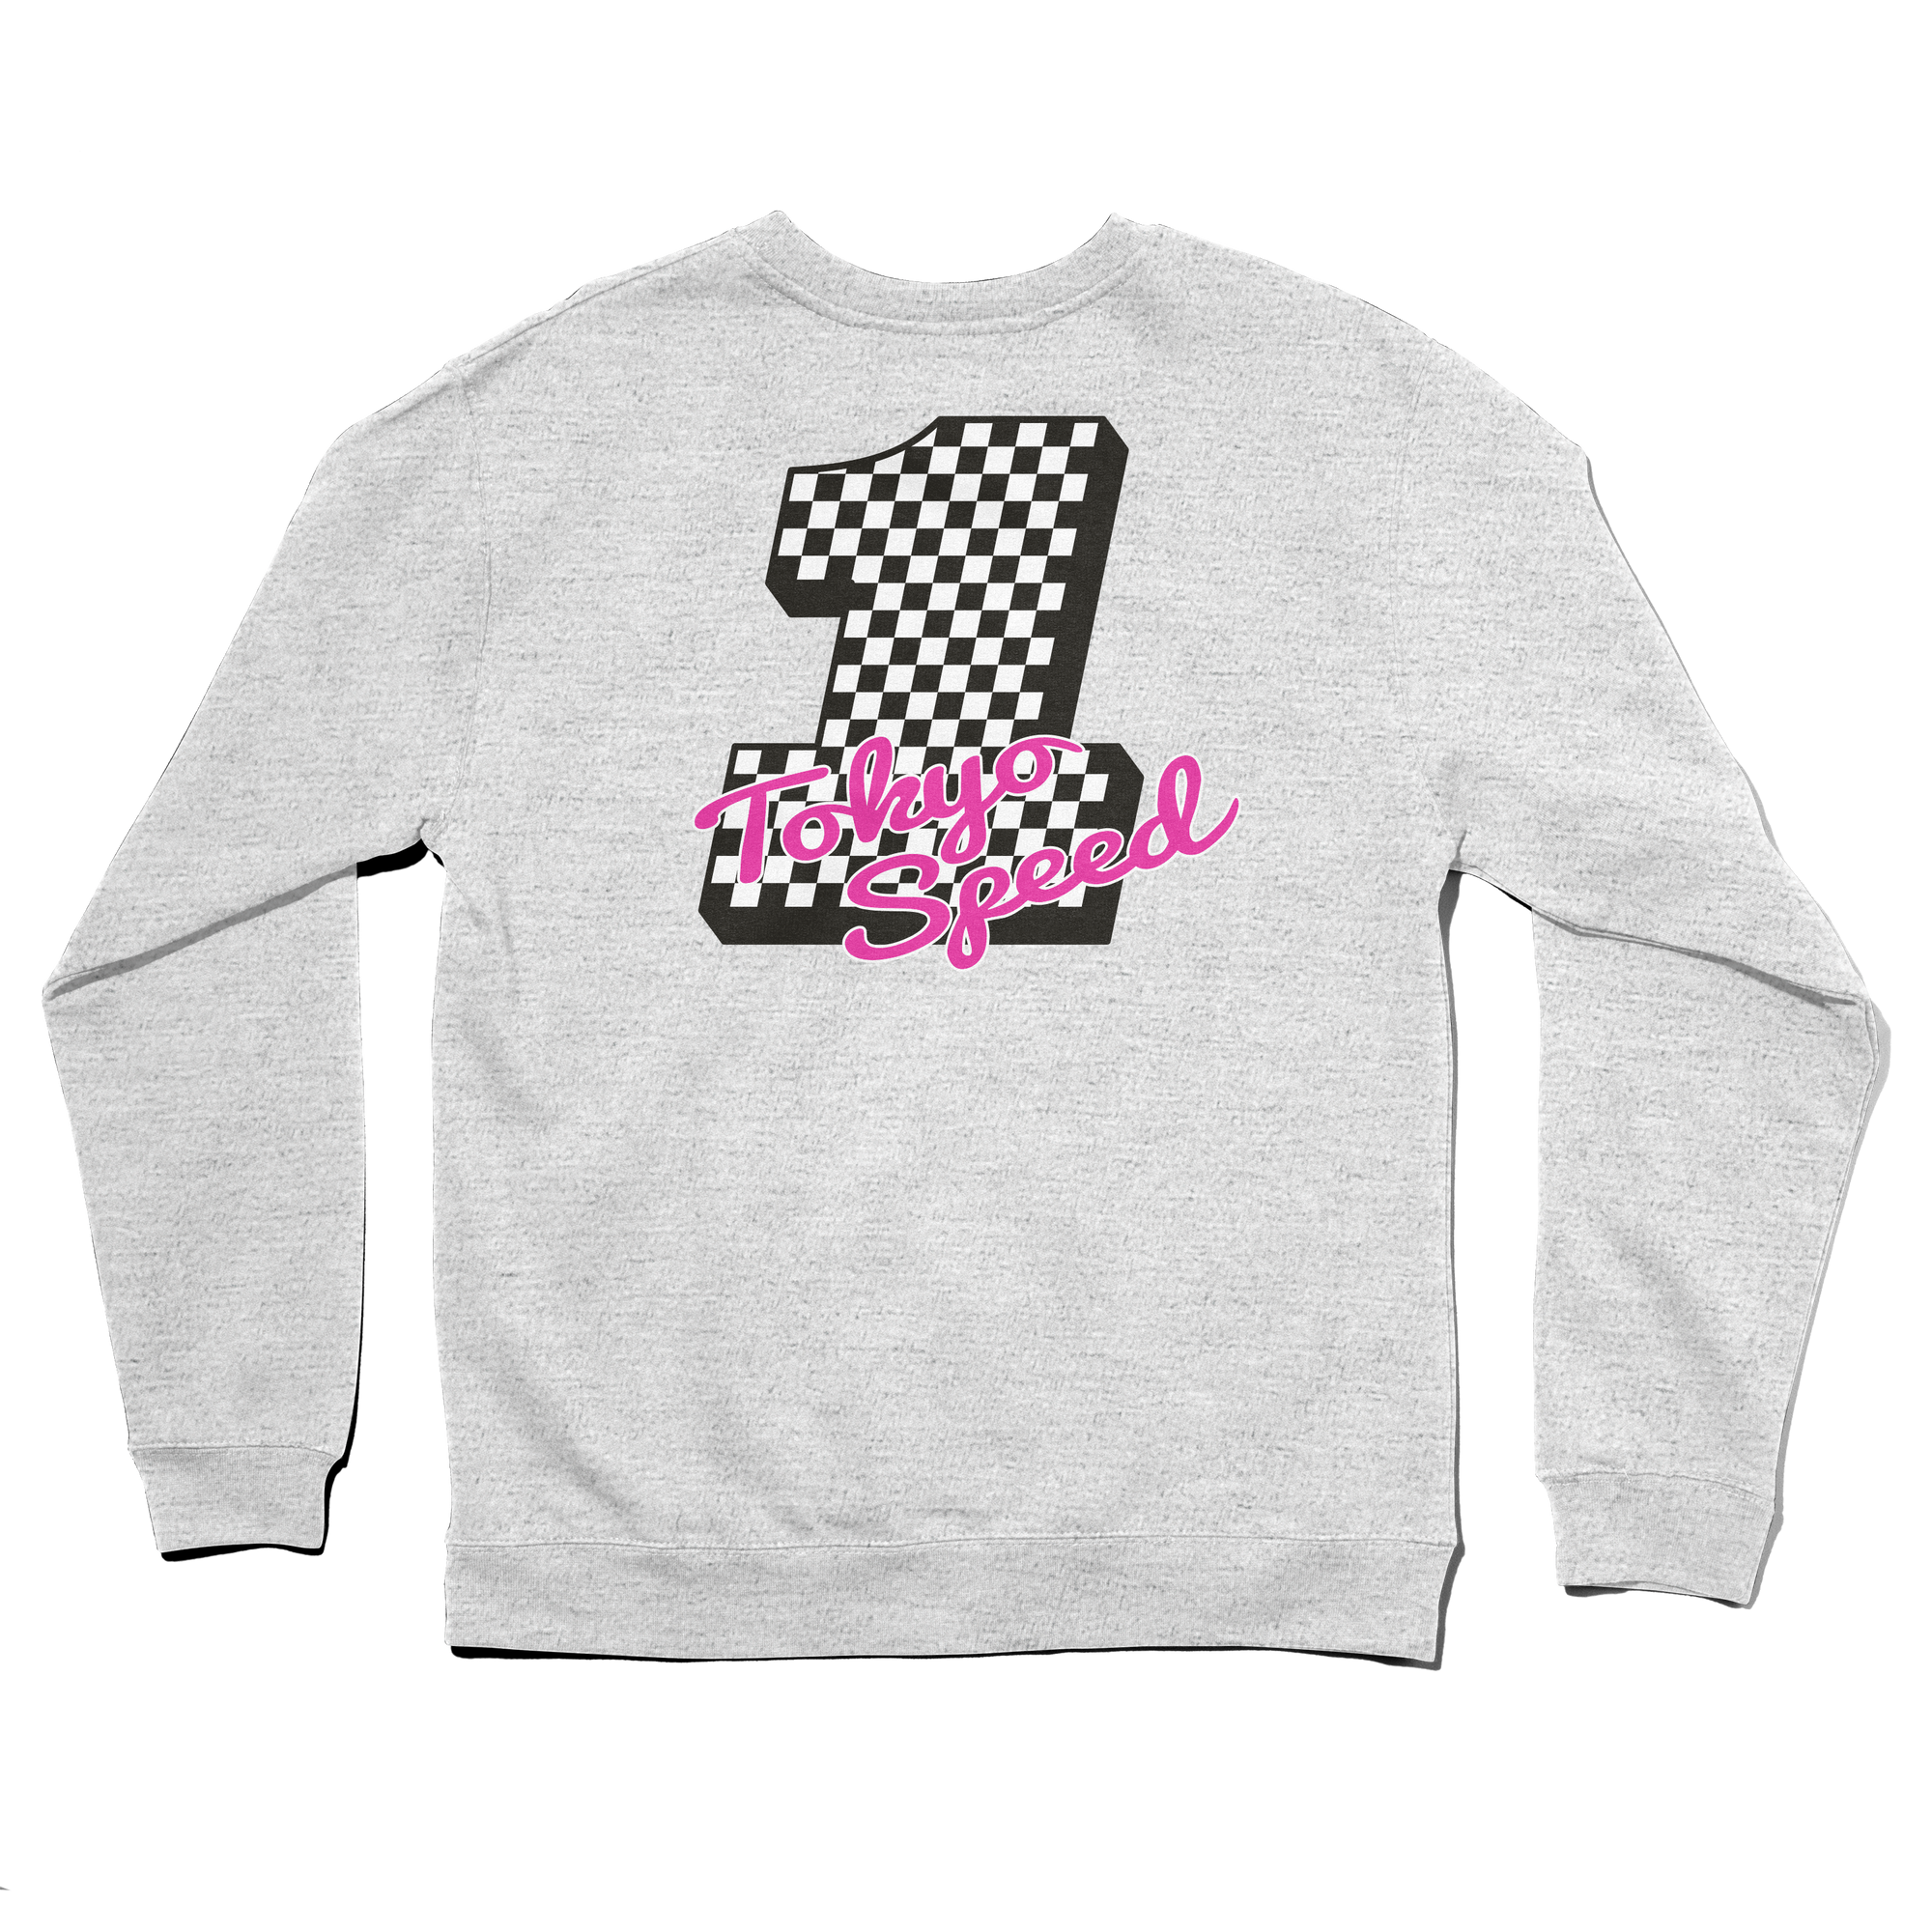 Hello Kitty x GIRL Tokyo Speed #1 Sweatshirt (Silver Ash) Apparel Girl Skateboards   